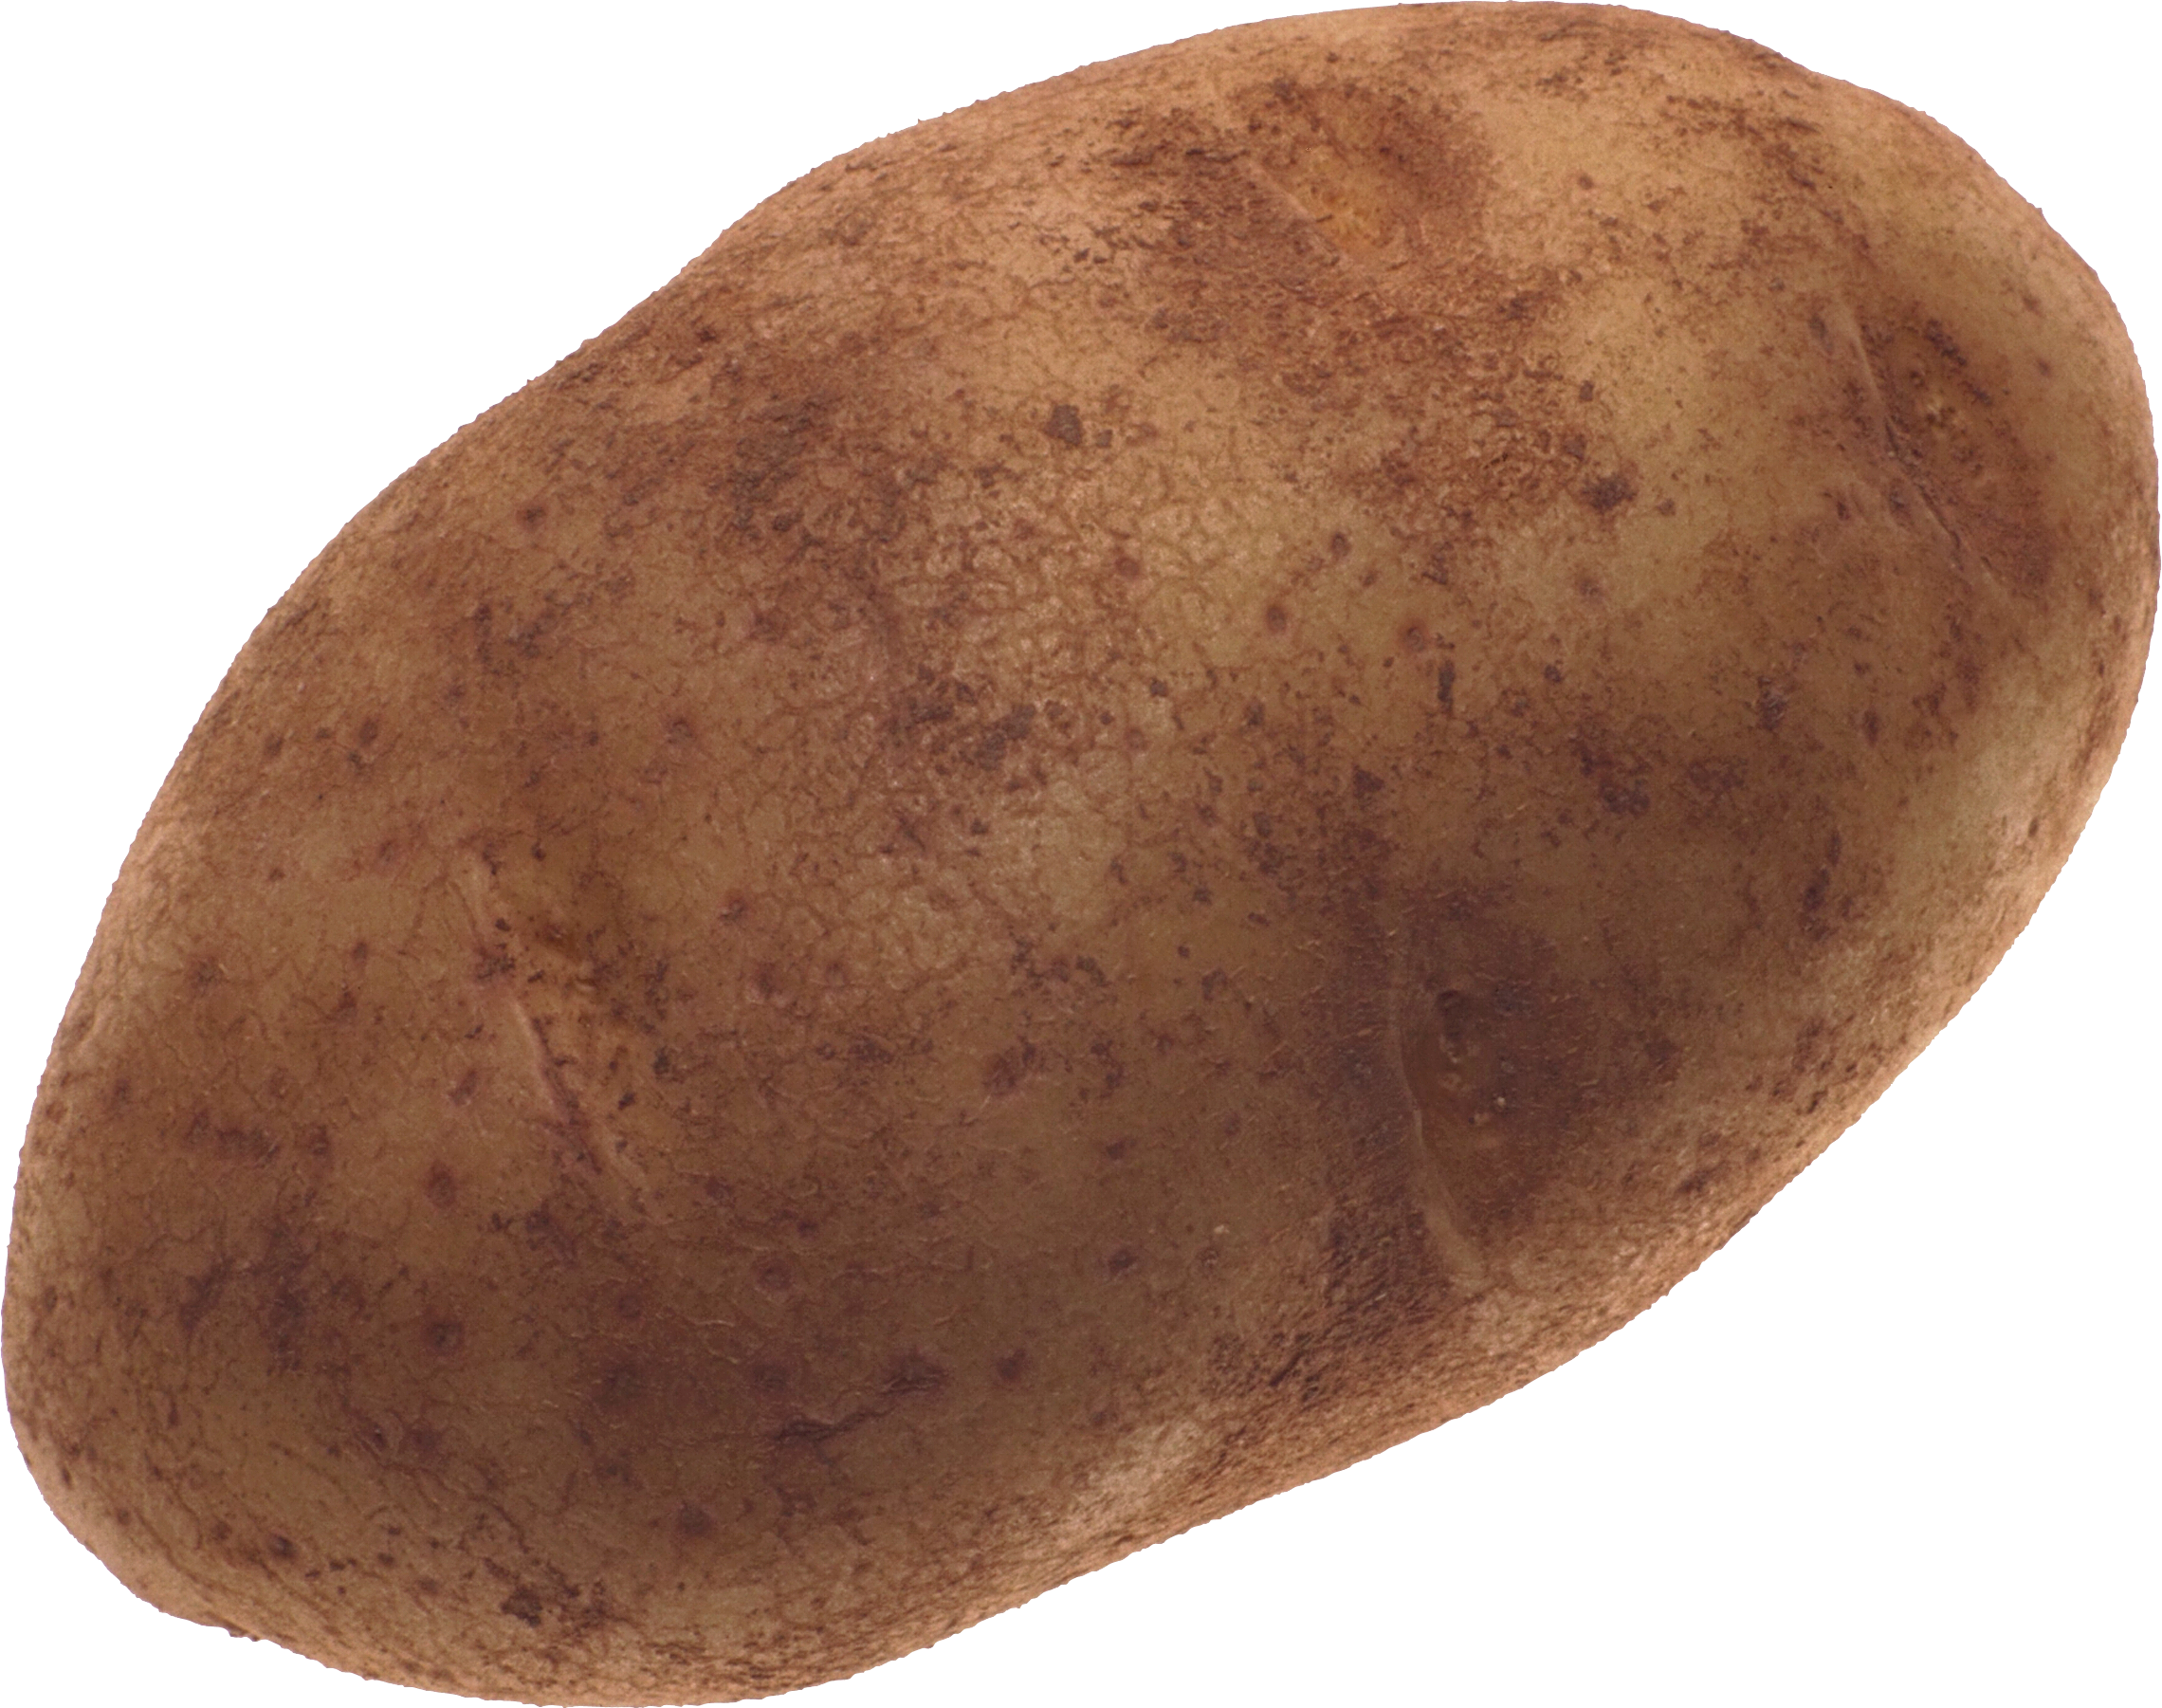 A Malignant Potato